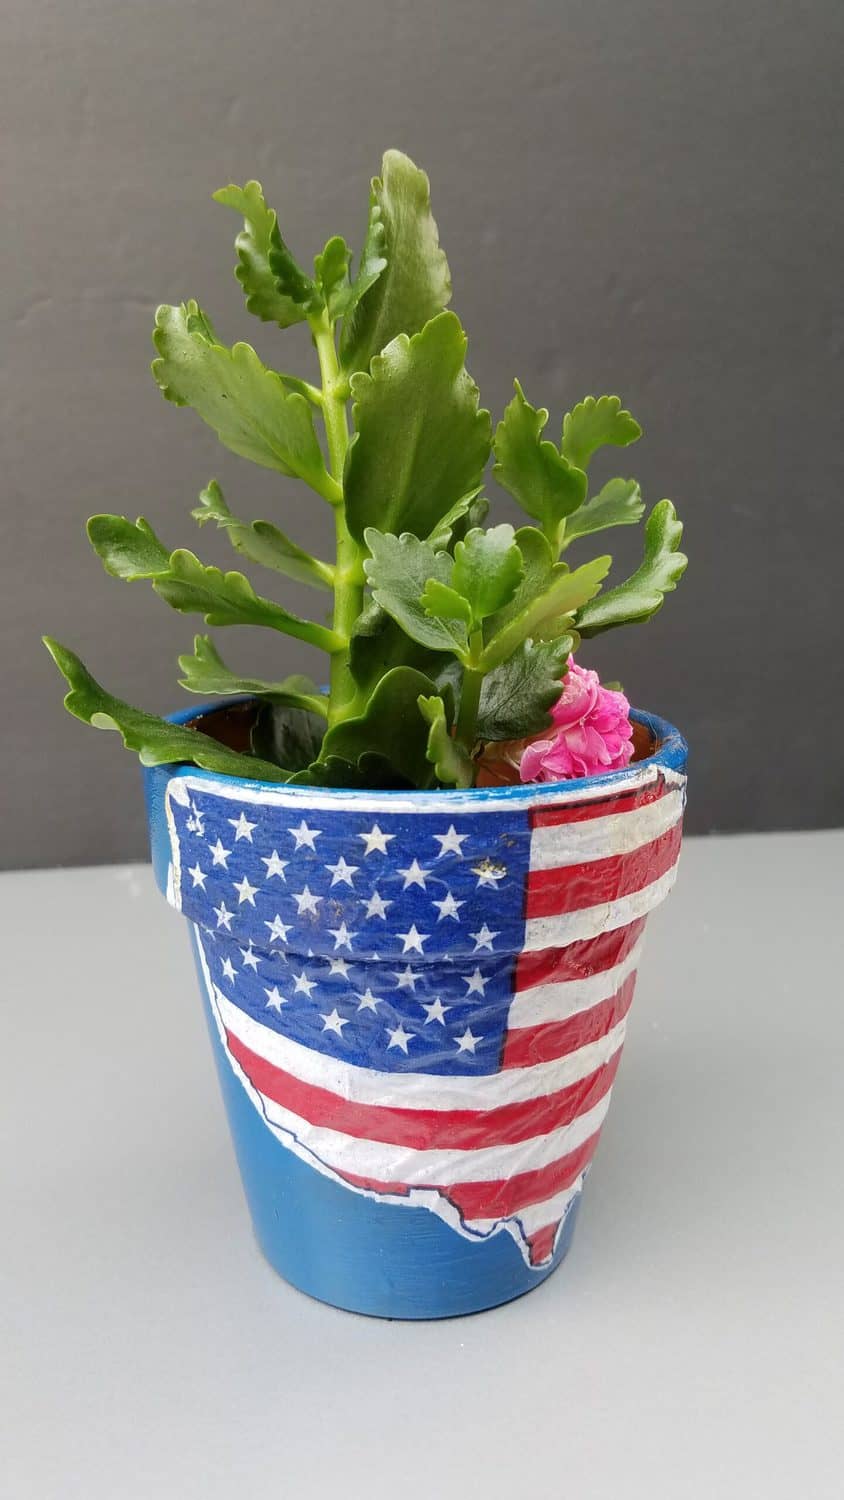 United States Decoupaged napkin on a pot